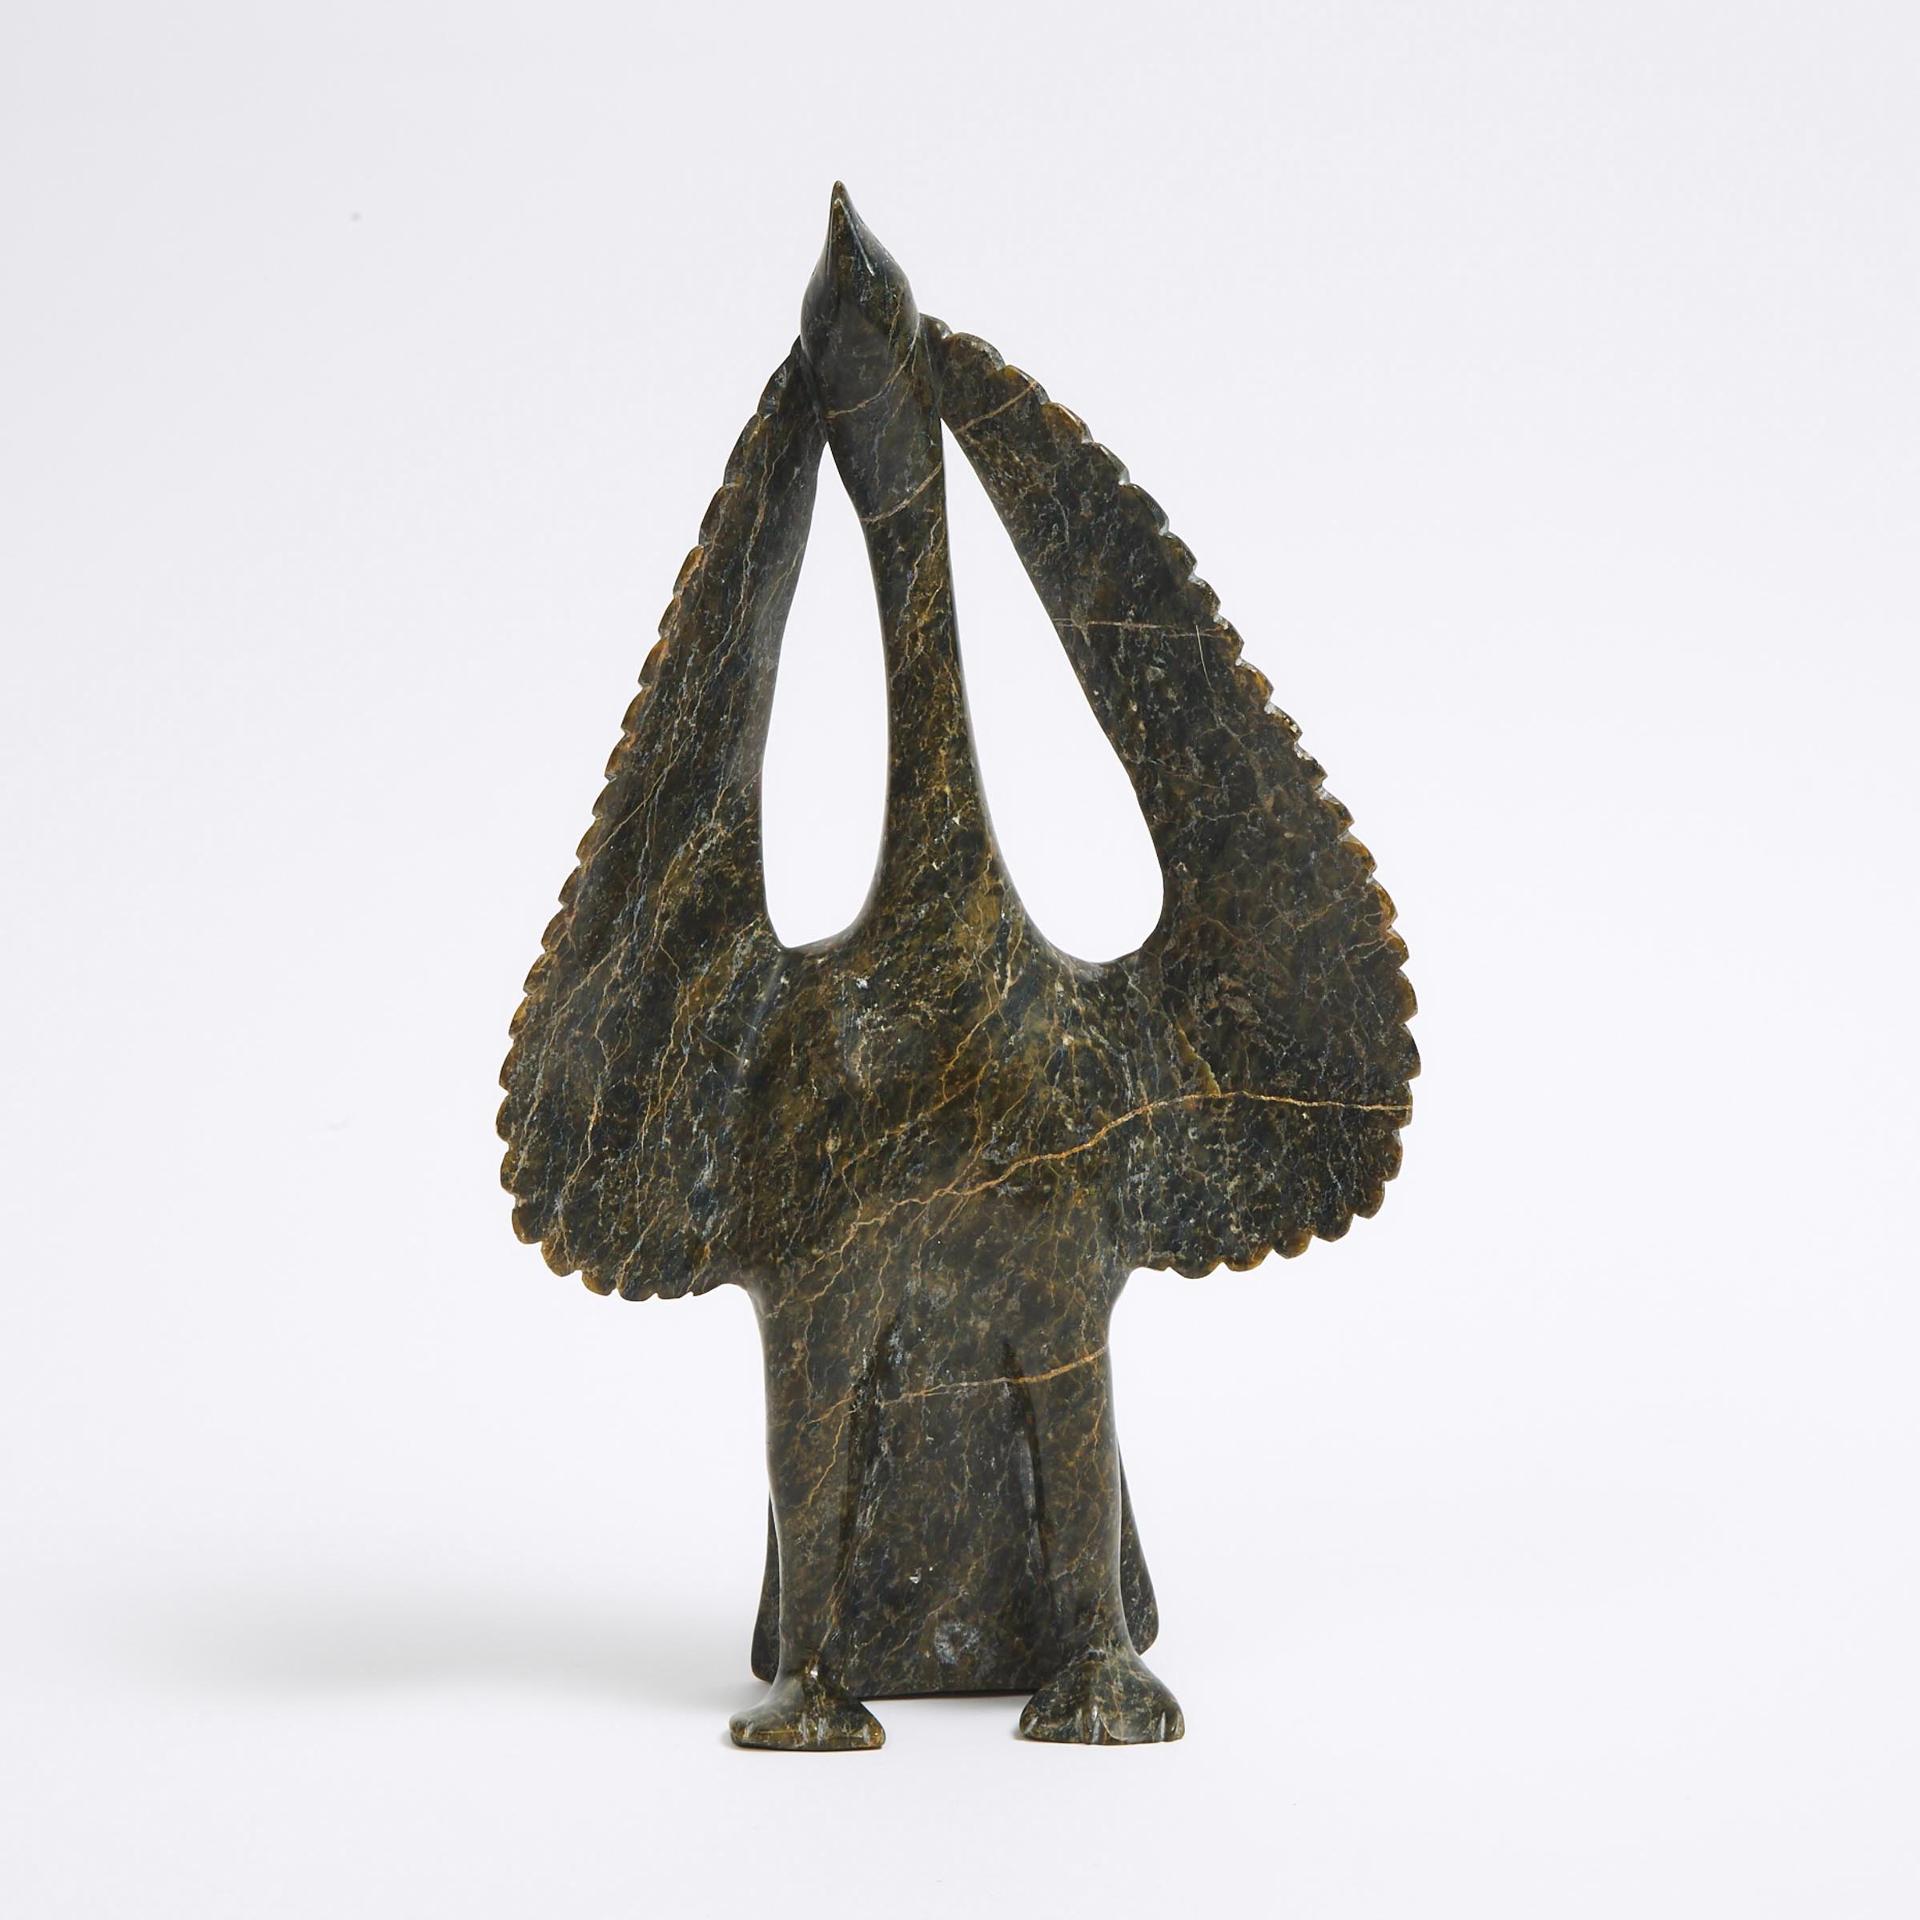 Qimiata Nungusuituq (1948) - Bird With Upswept Wings